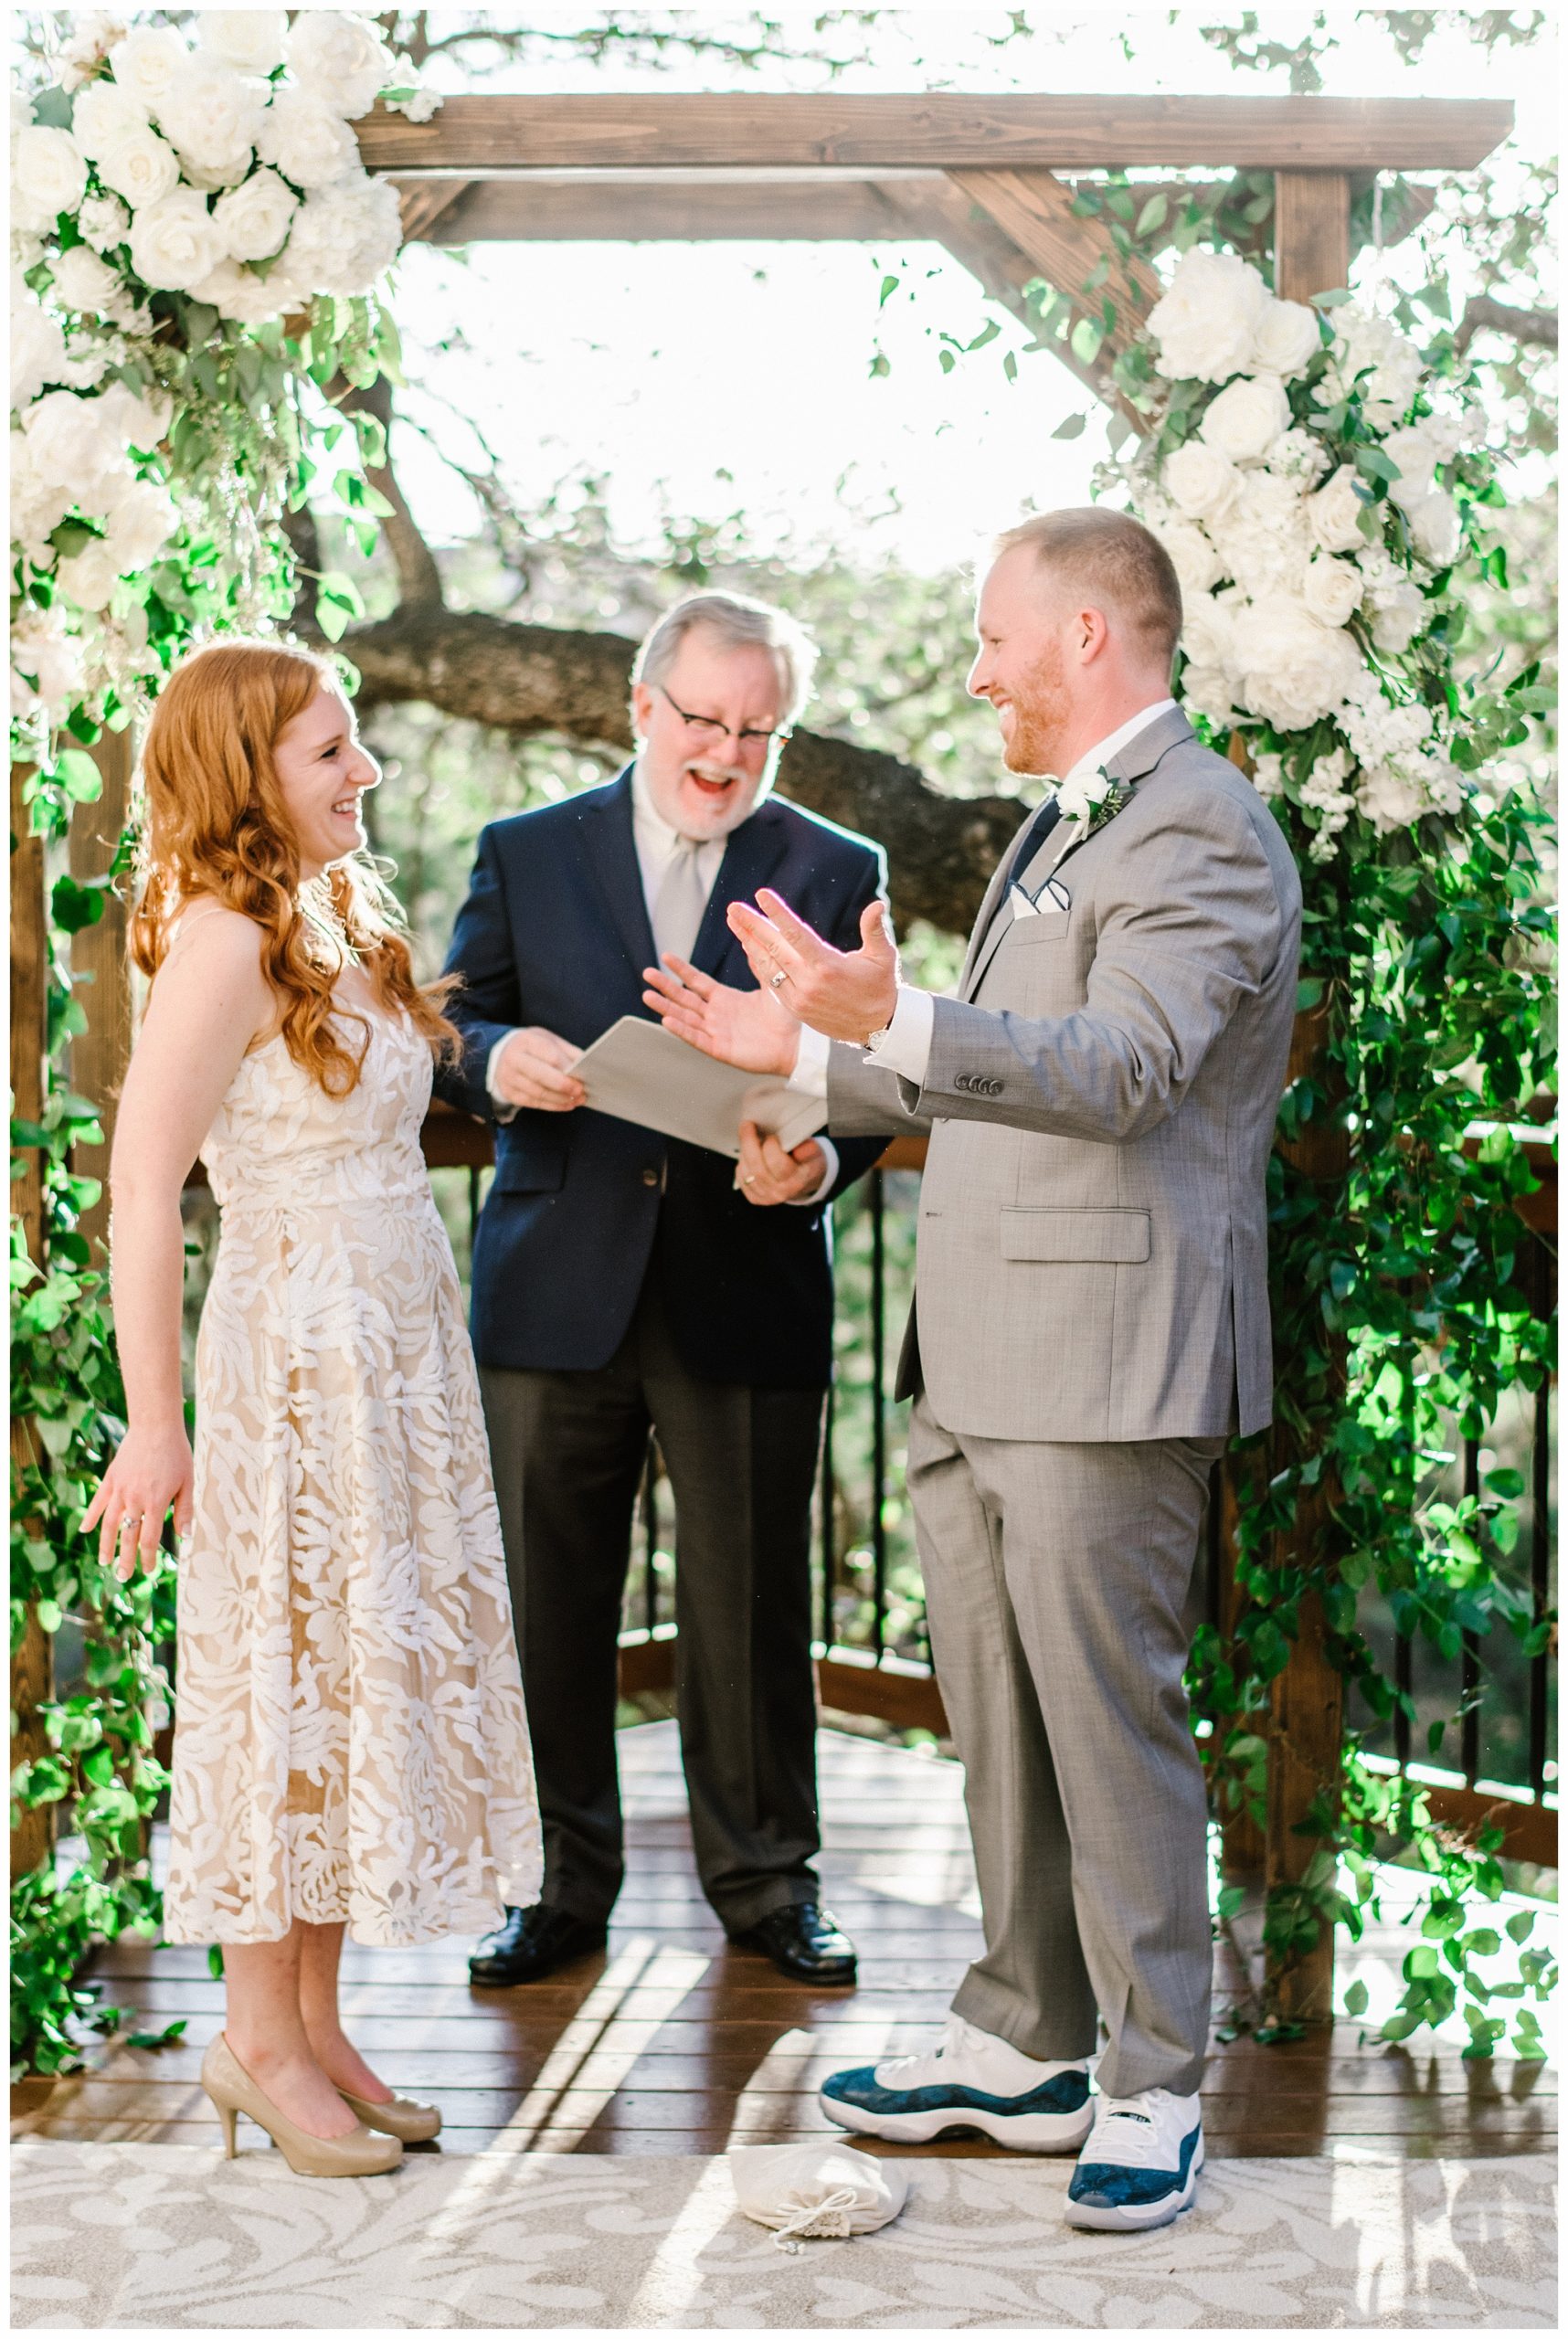 Intimate Backyard Wedding in Austin Texas